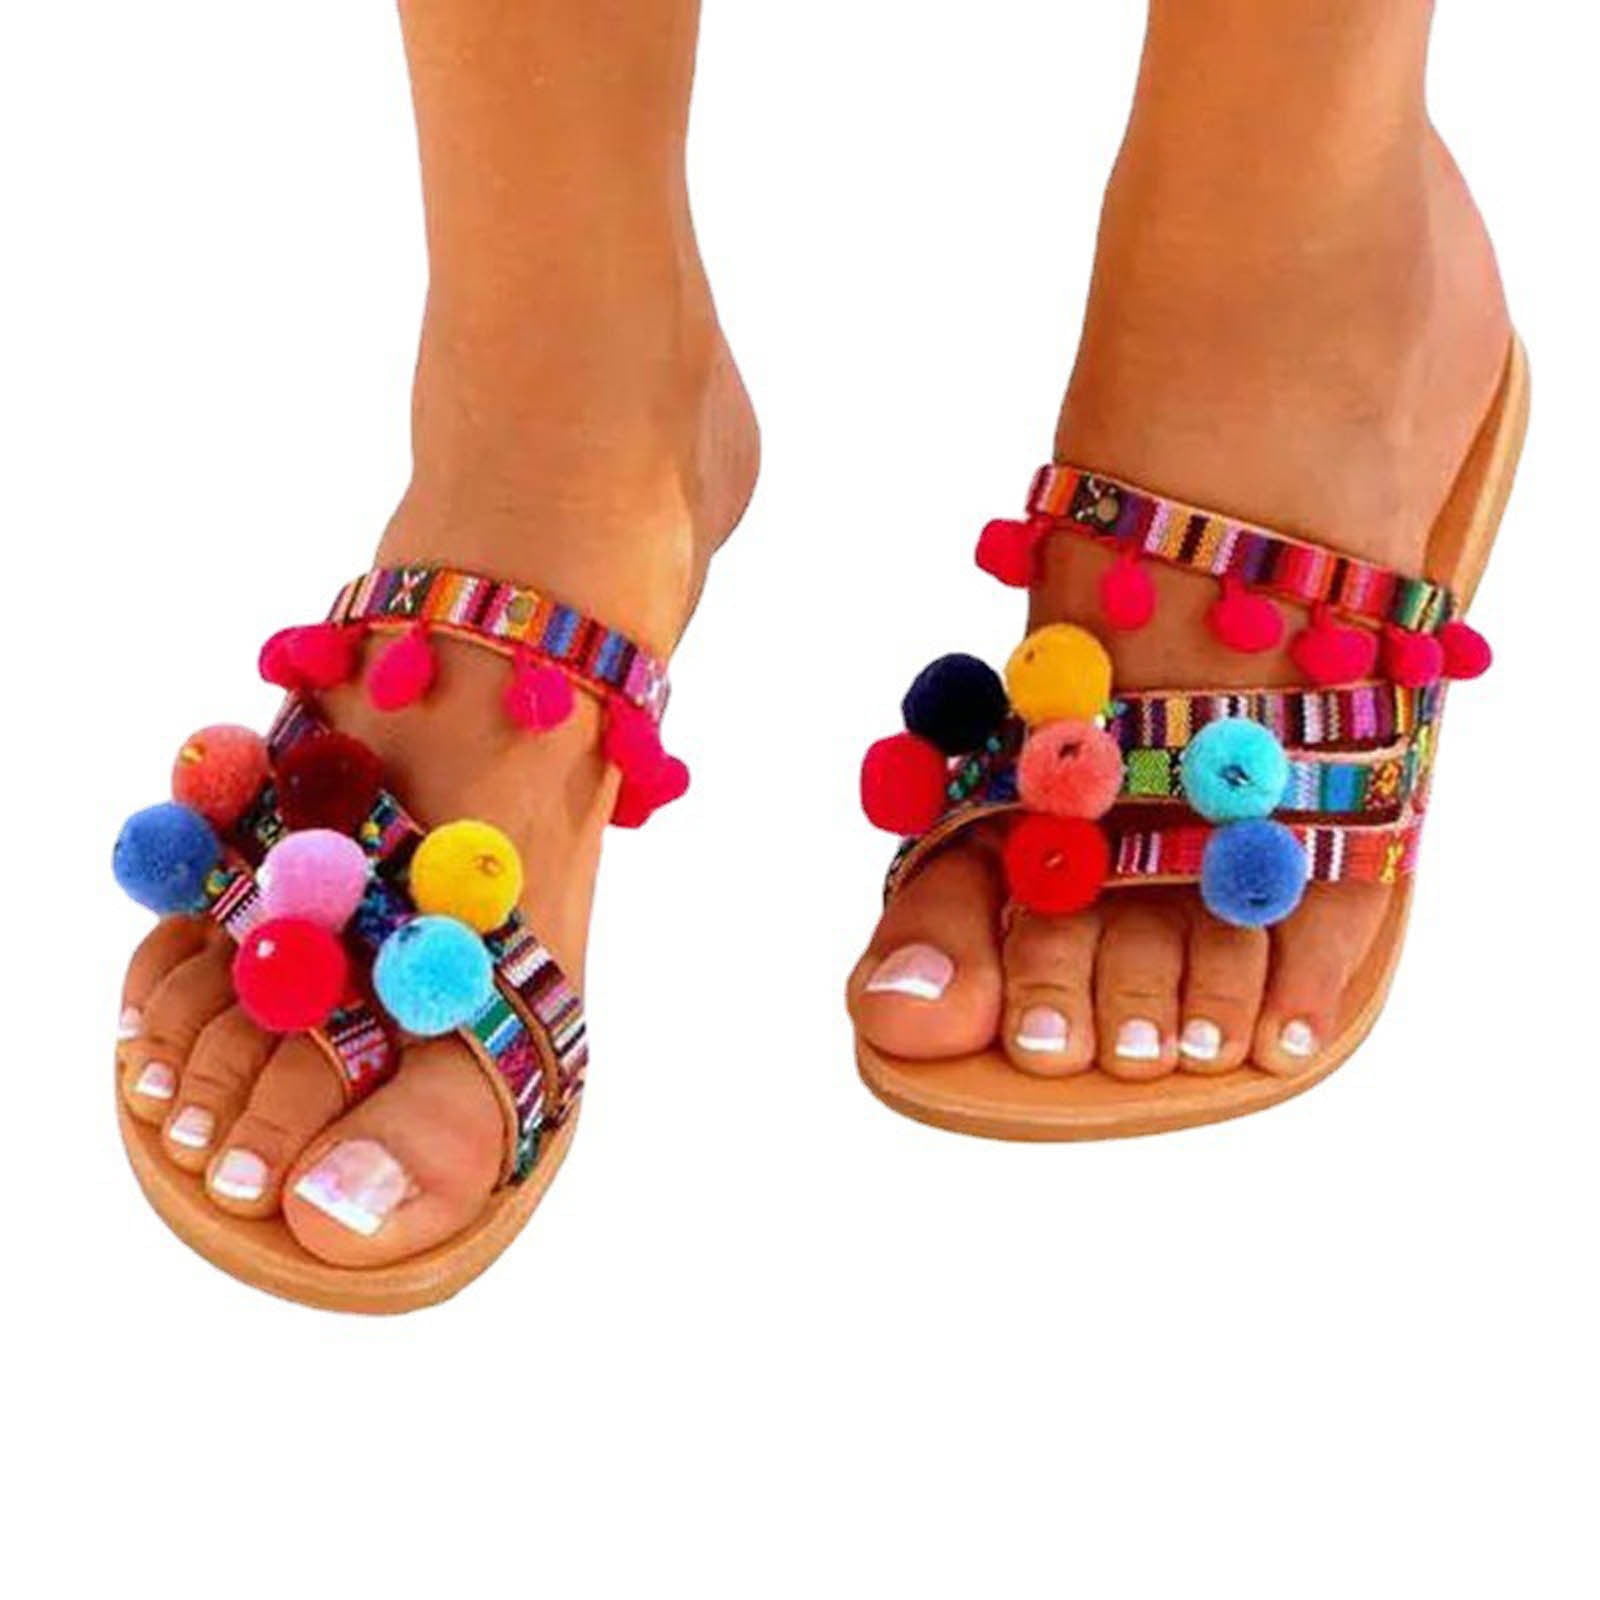 Slide Sandals for Women Girls Dressy Low Wedge Sandal Casual Open Toe Flat Sandals Summer Beach Slip on Sandals Platform Sandals -